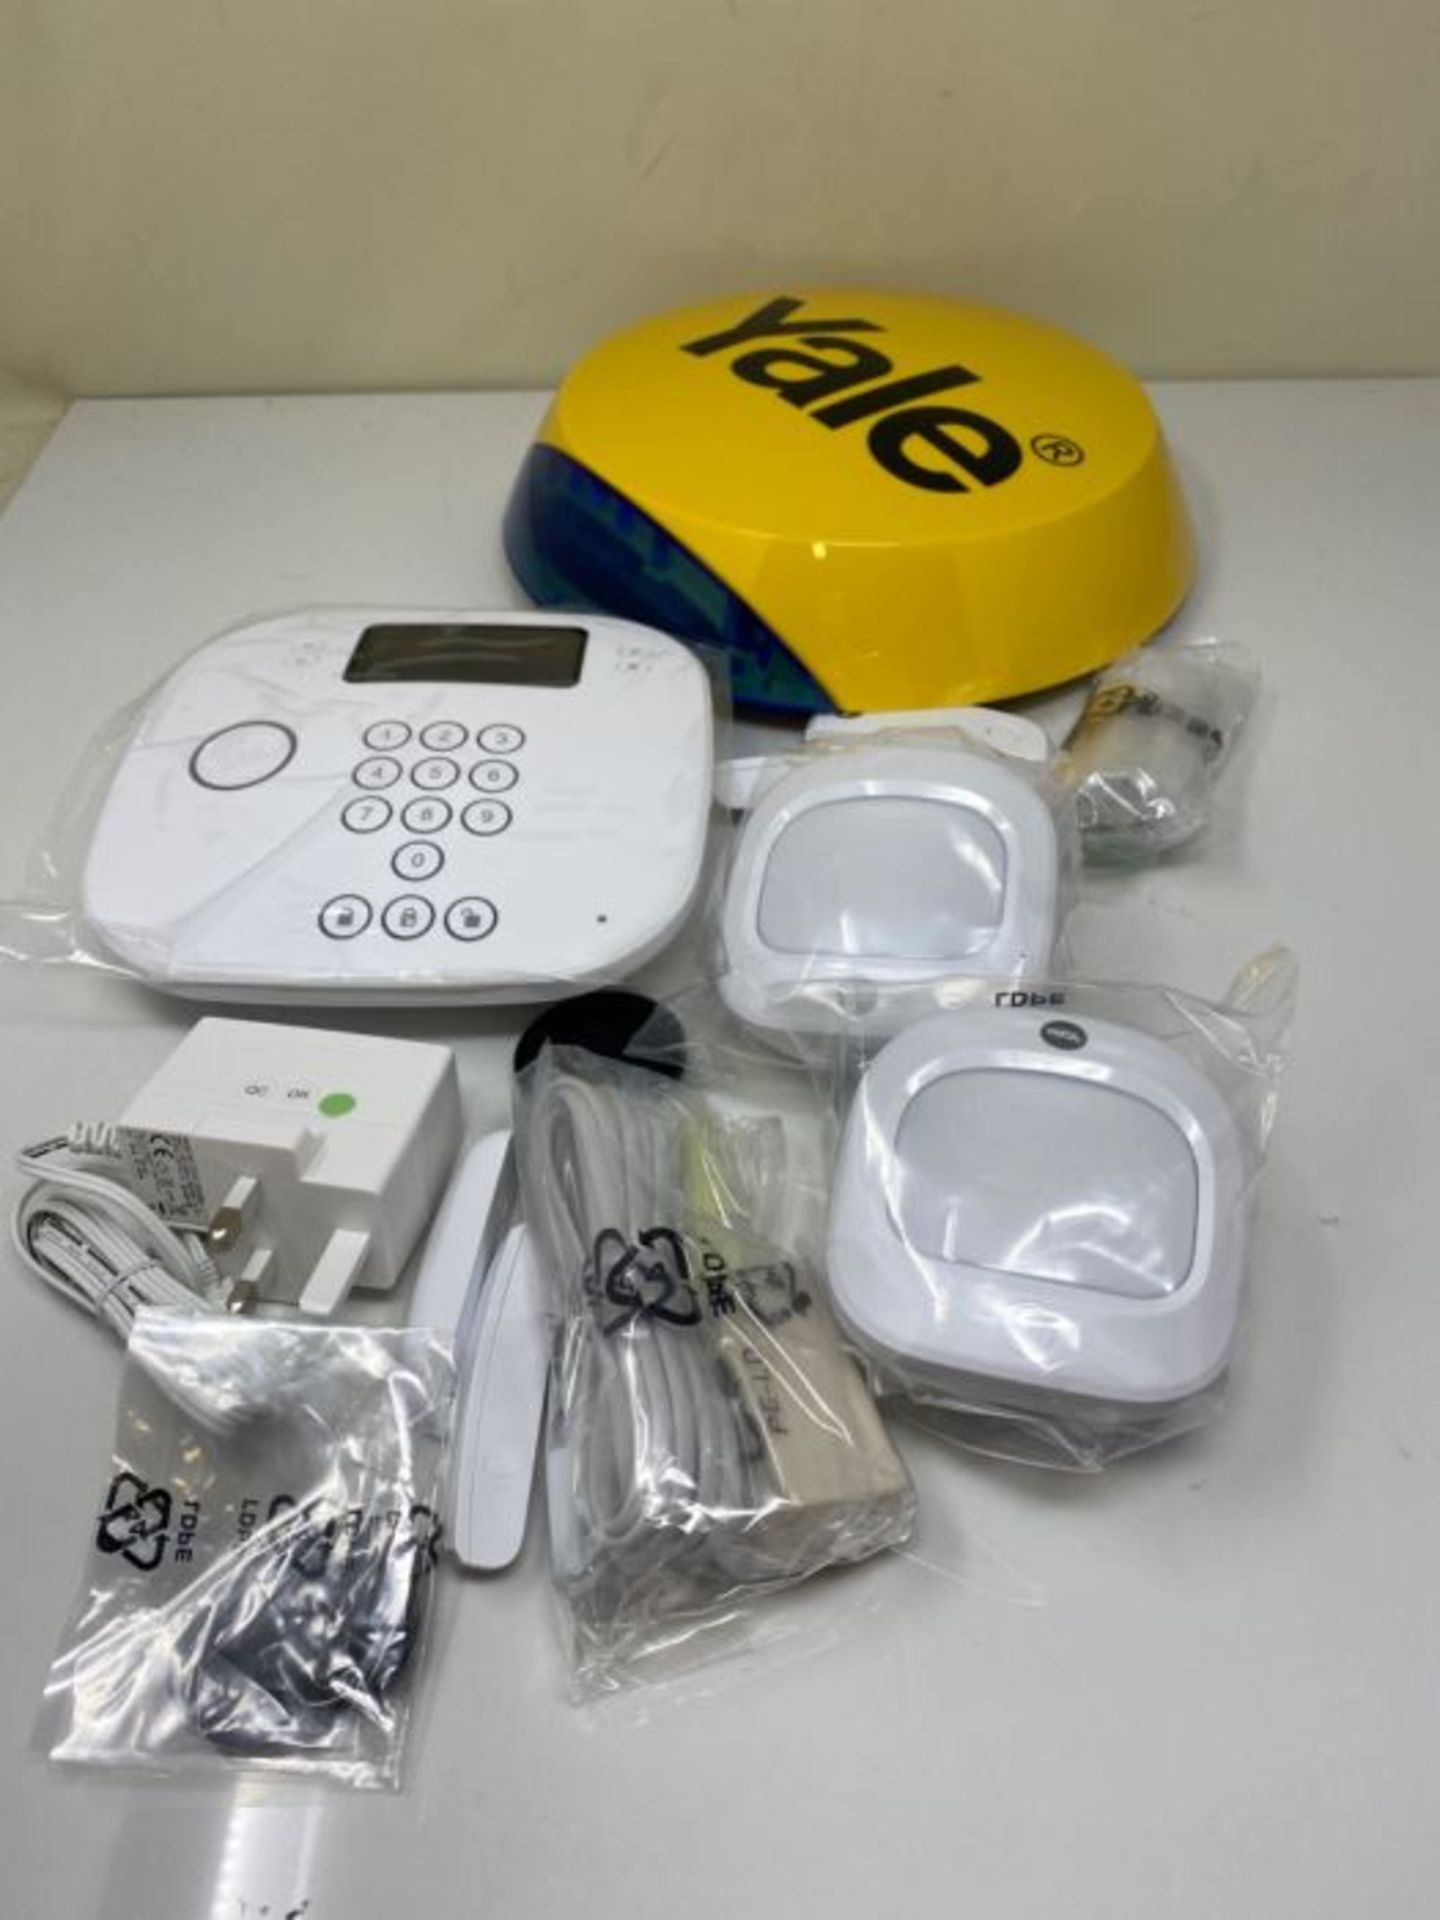 RRP £249.00 Yale IA-230 Intruder Alarm Plus Kit, Phone Call Alerts, 11 Piece Kit, Pet Friendly PIR - Image 3 of 3